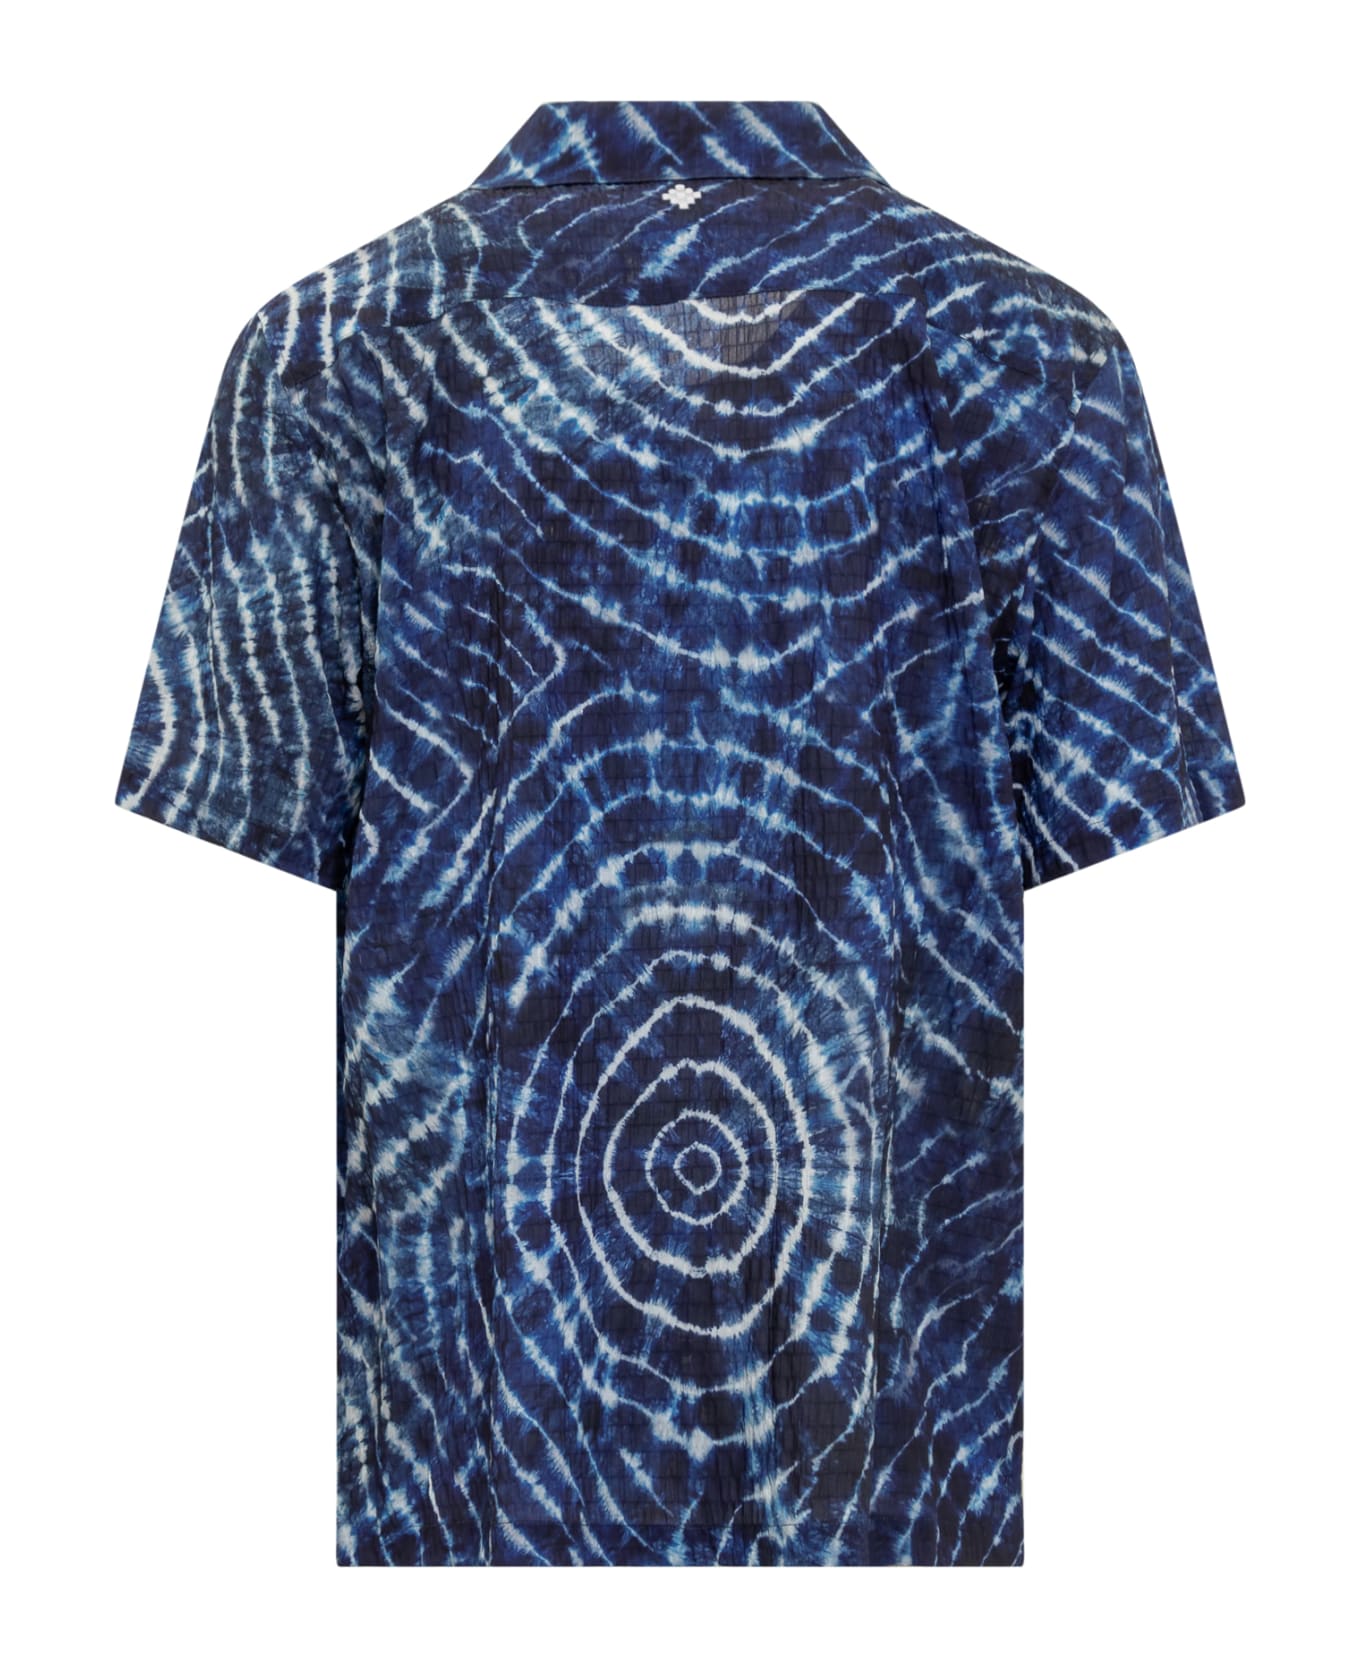 Marcelo Burlon Soundwaves Shirt - BLUE WHITE